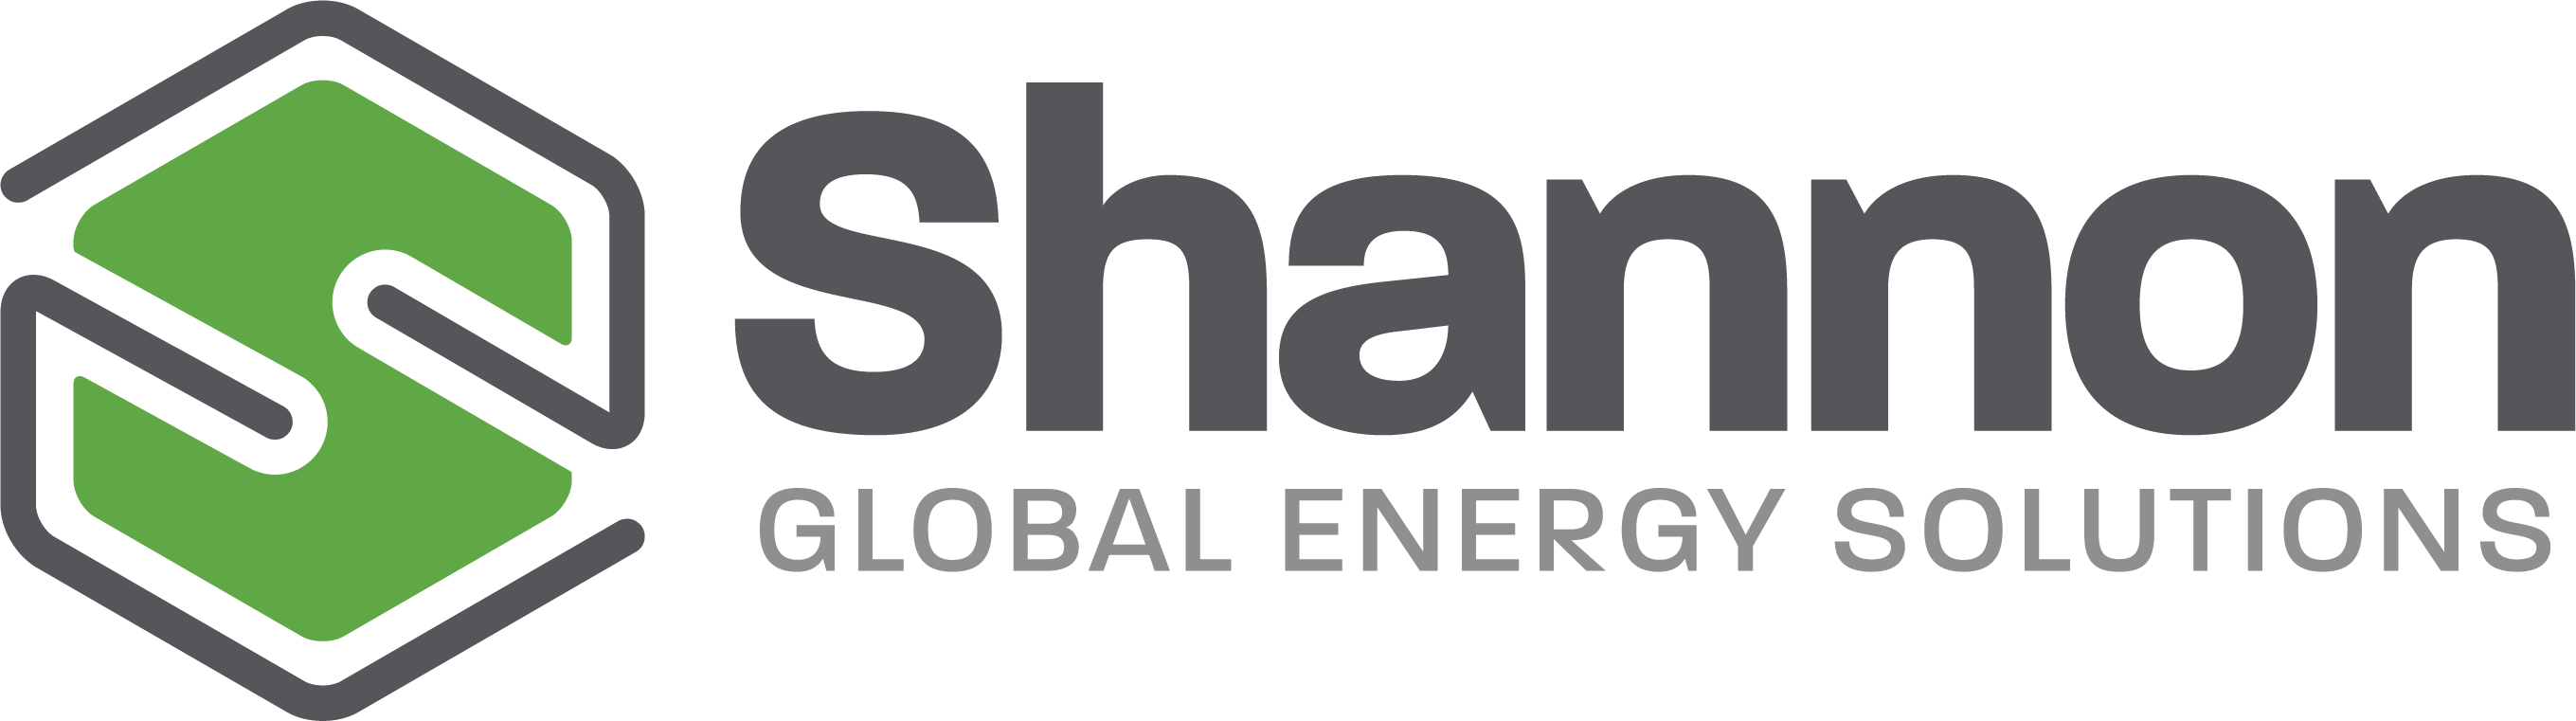 Shannon Global Energy Solutions Logo